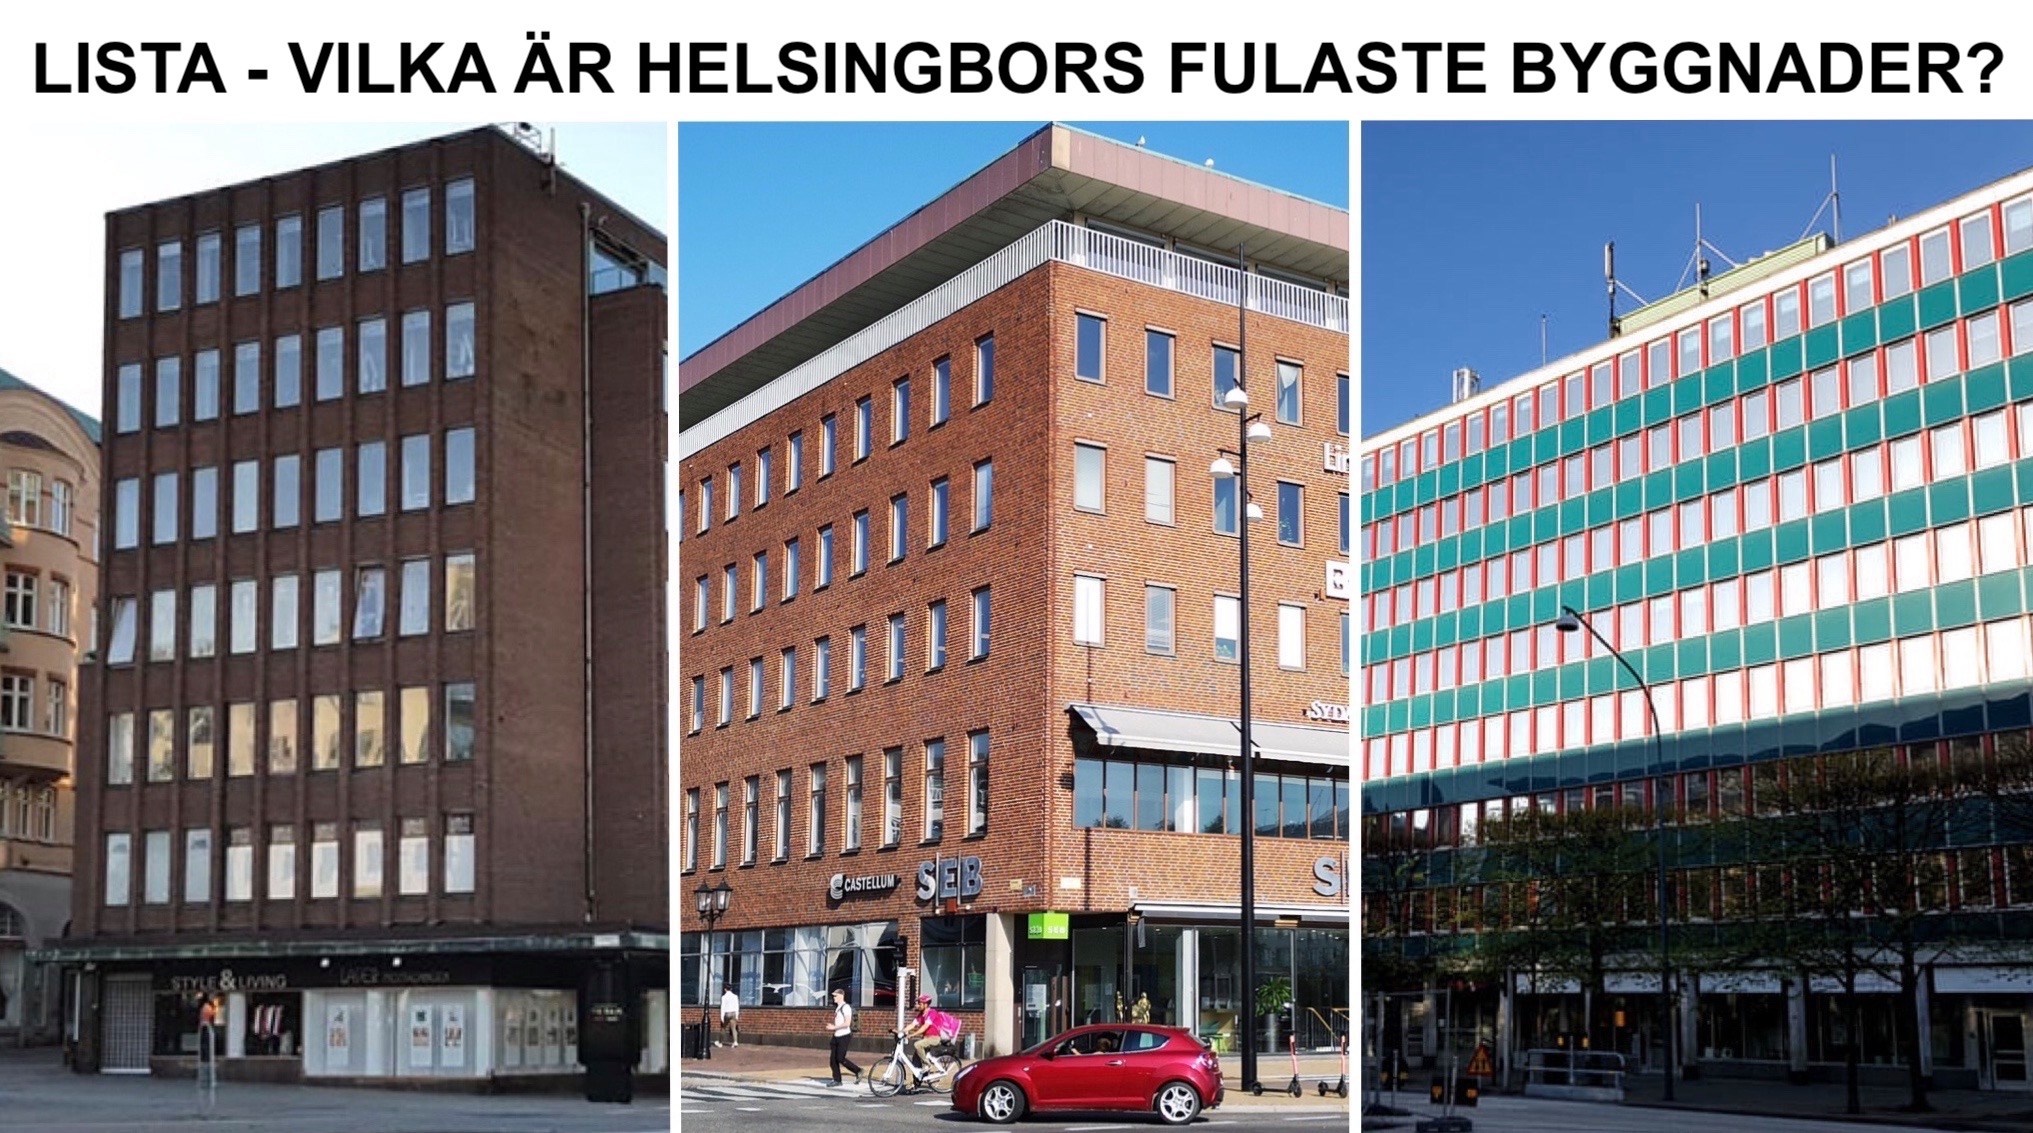 Lista - Helsingborgs fulaste byggnader.